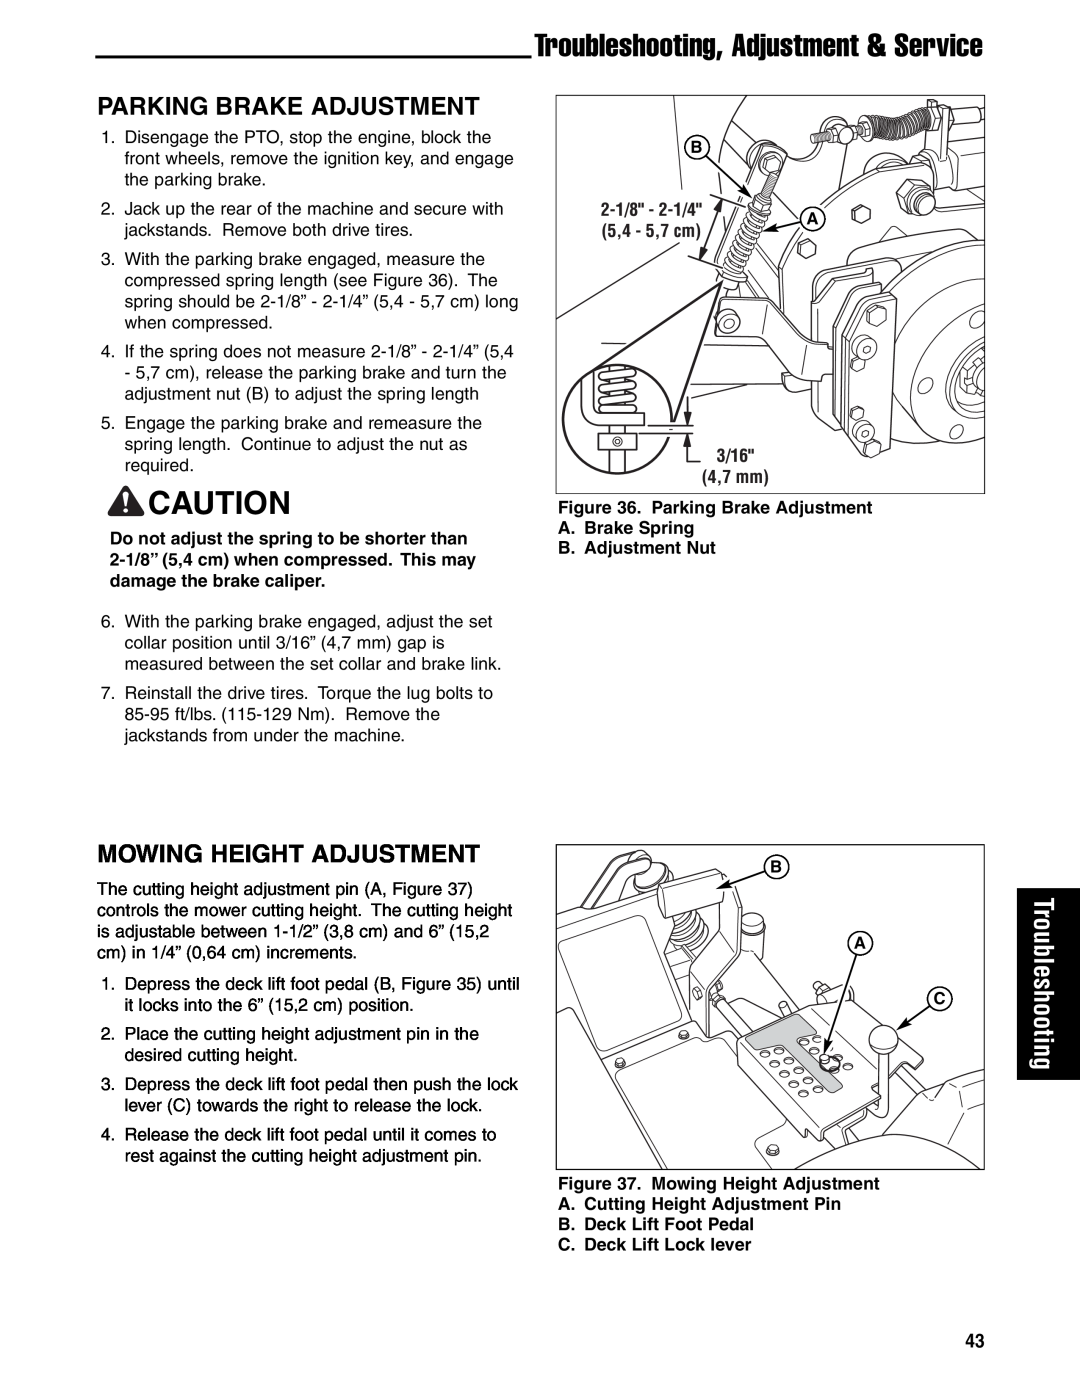 Ferris Industries 5901179 manual Parking Brake Adjustment, Mowing Height Adjustment, Troubleshooting, Adjustment & Service 